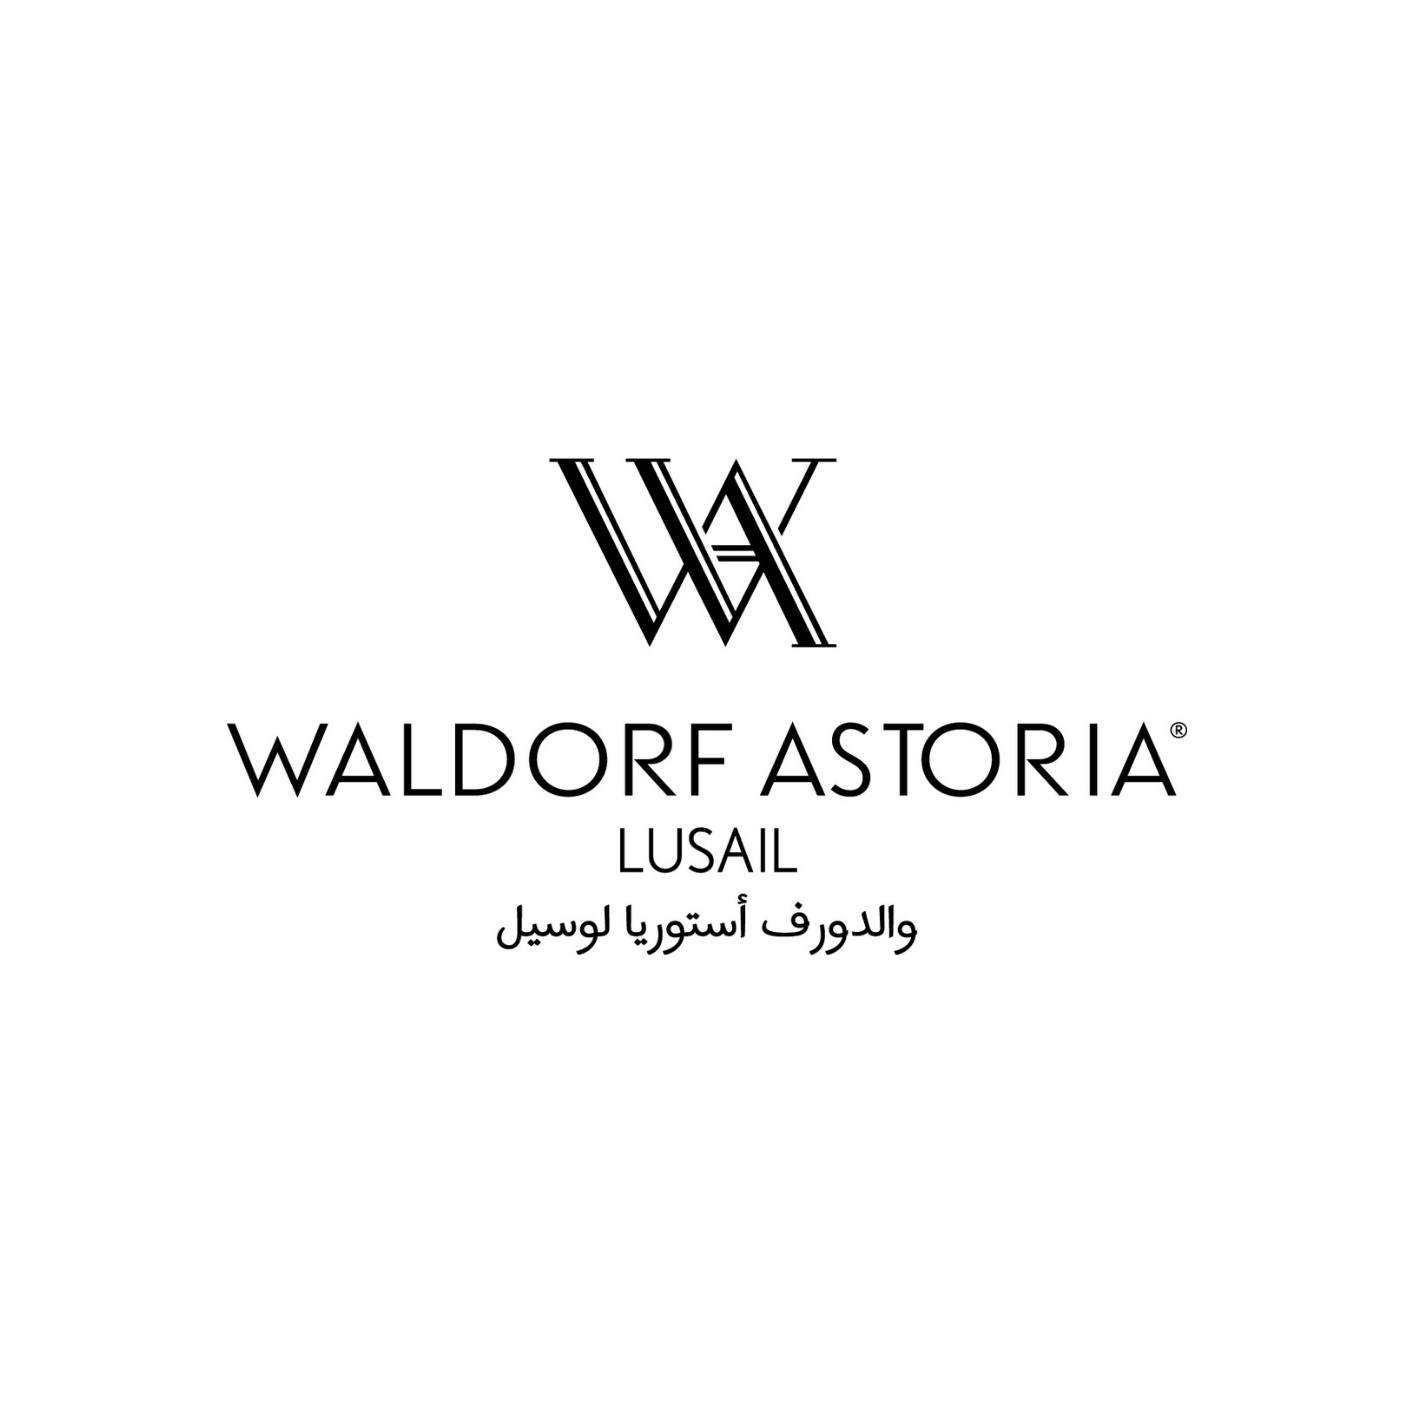 Image result for Waldorf Astoria Lusail, Doha